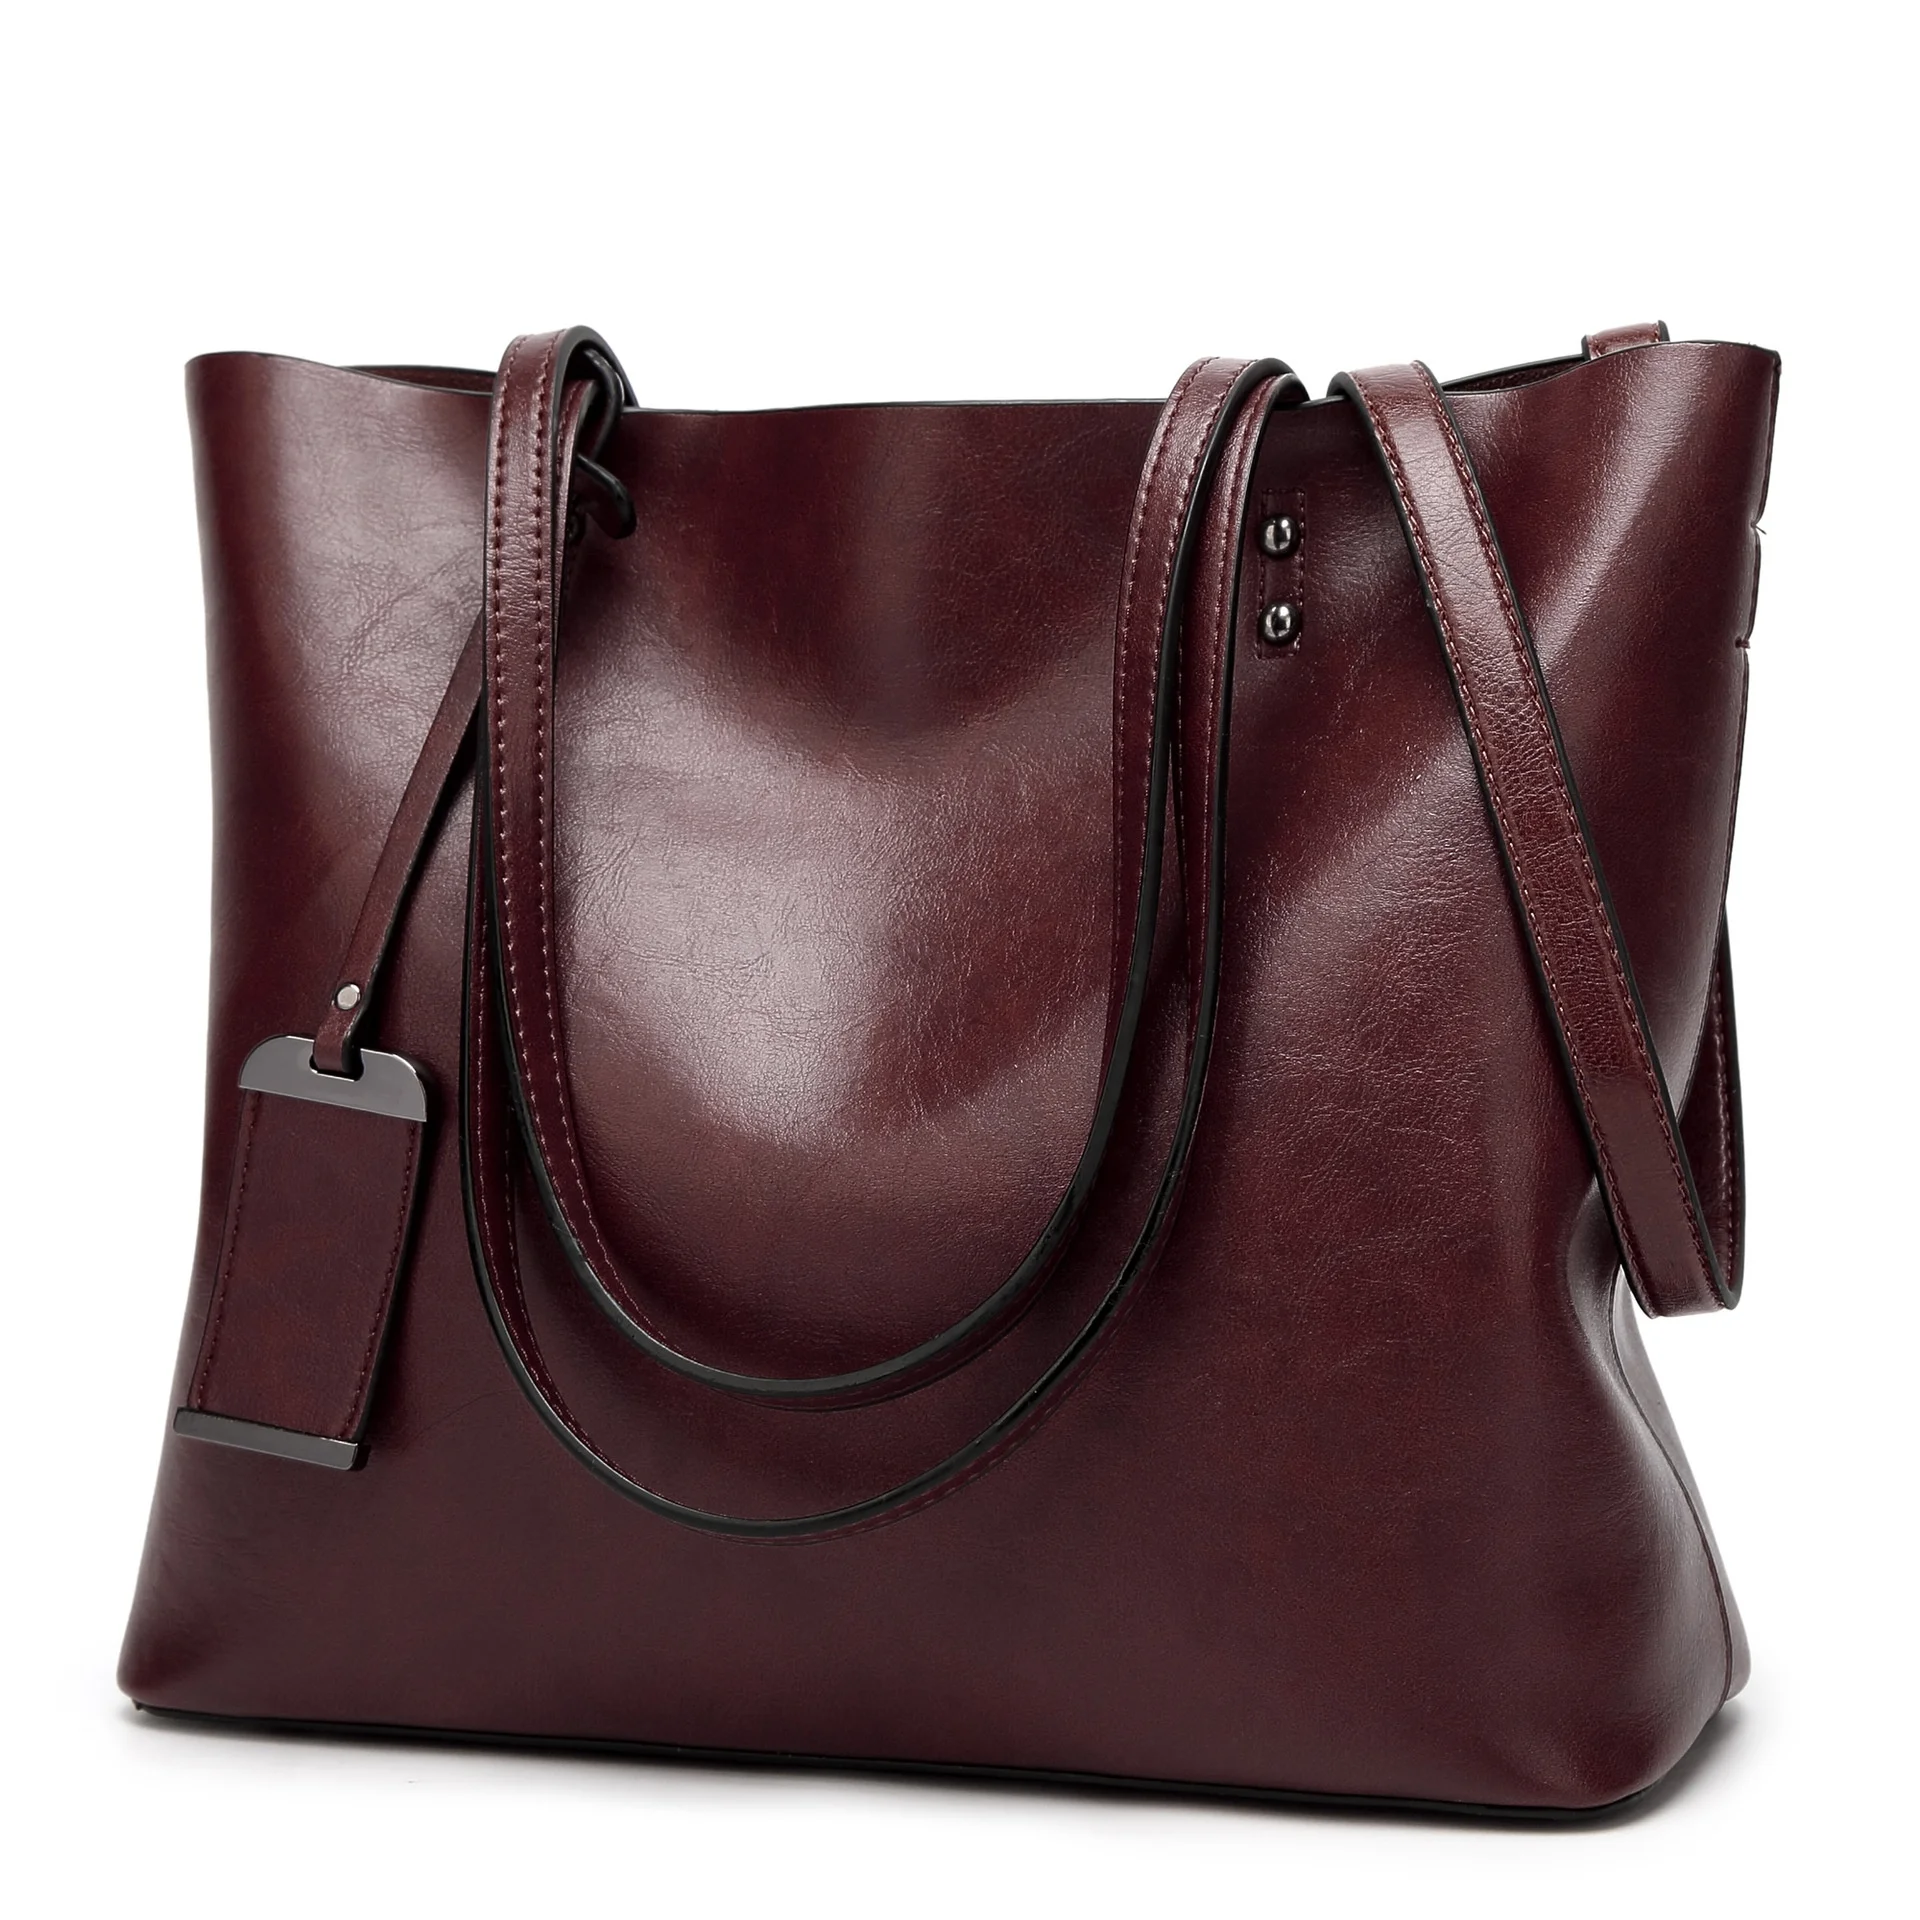 

2021 Amazon Fashion Large Capacity Women's Bags Retro Handbags Oil Leather Rivet Bags Female Bags, Customizable